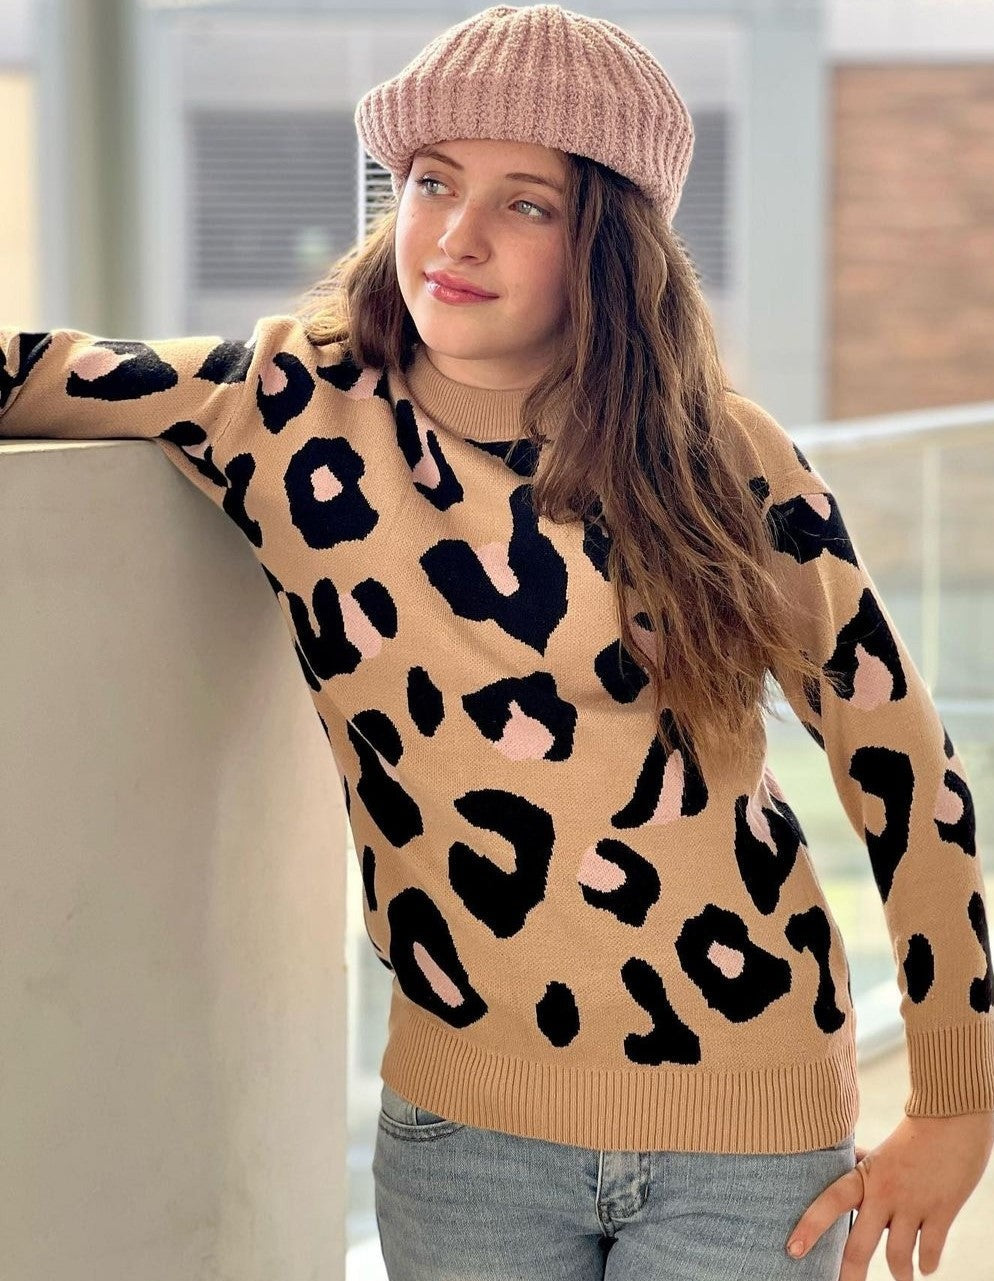 Leopard Knitted Beanie Hat - Khaki